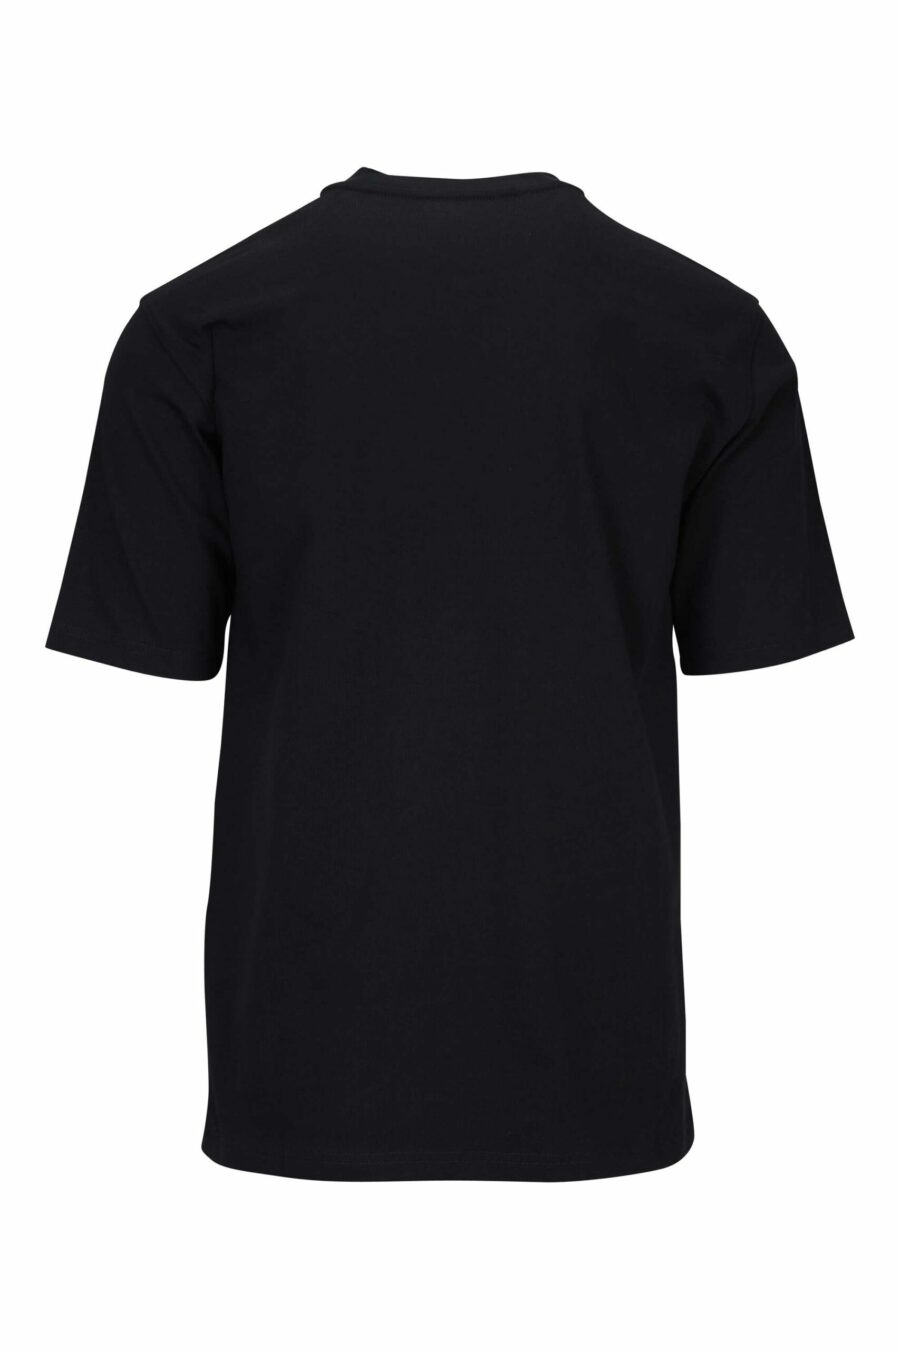 Camiseta negra mix con bolsillo y logo etiqueta monocromático - 667113452036 2 scaled